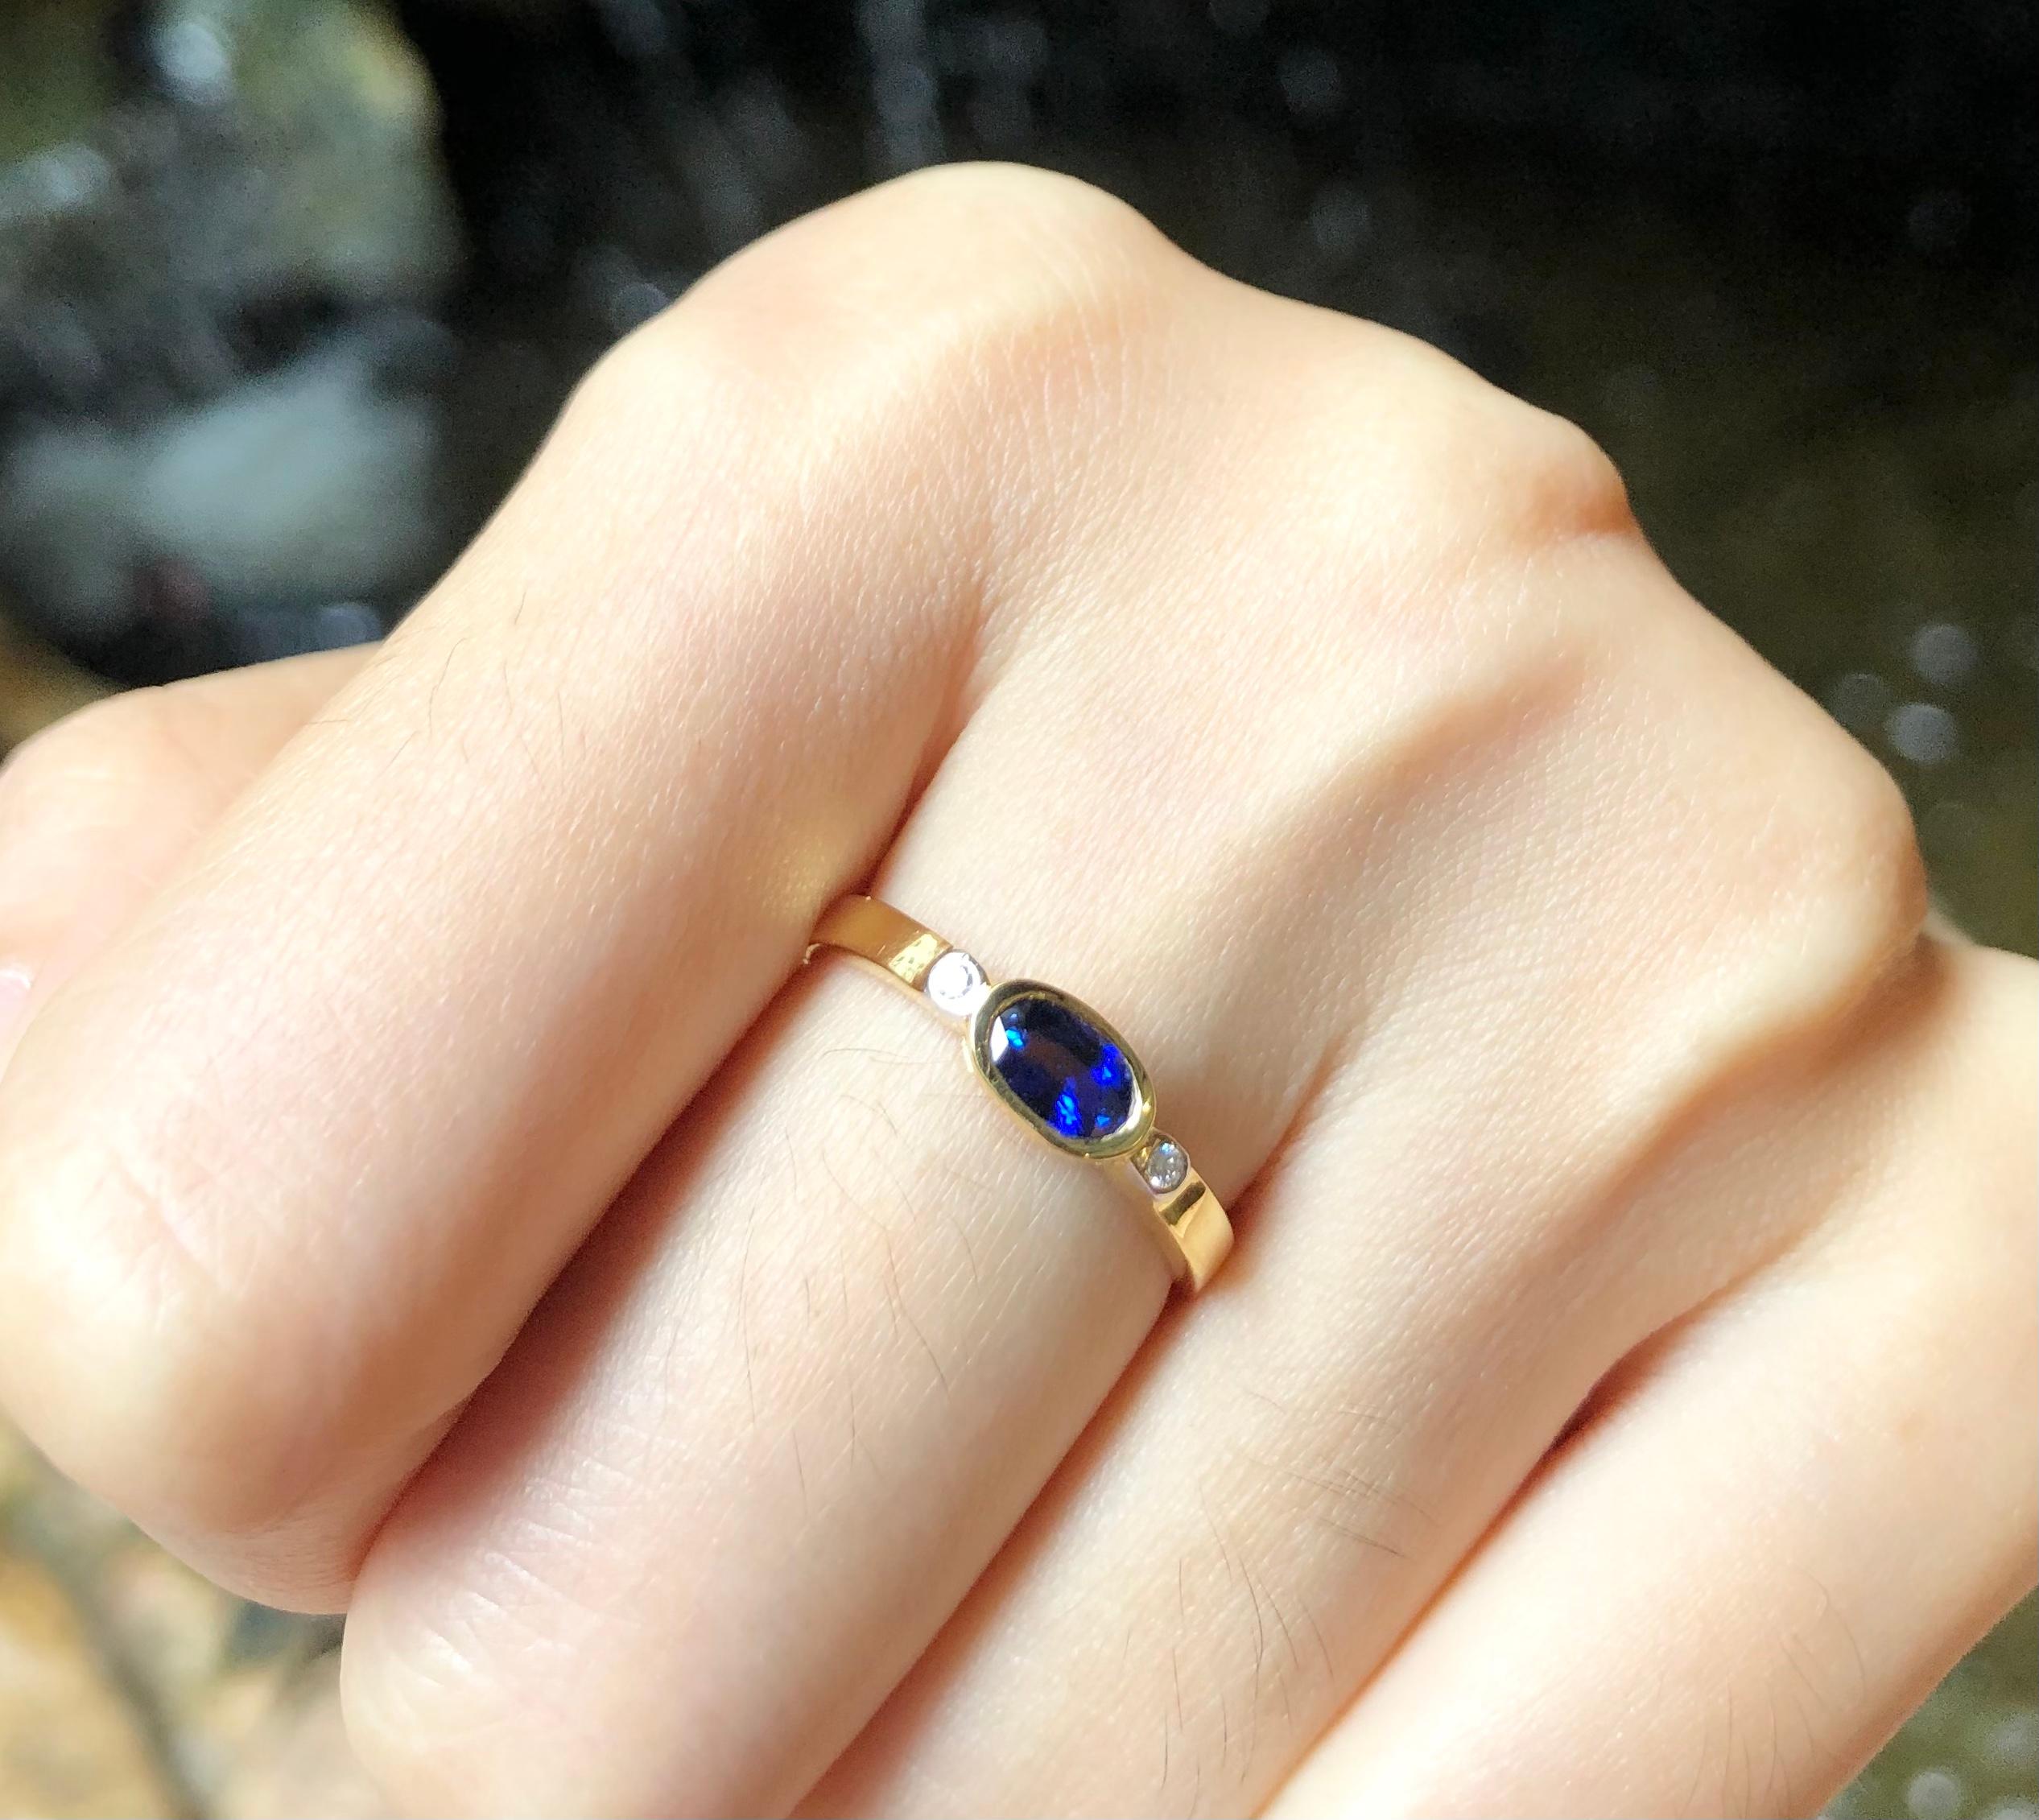 Blue Sapphire 0.45 carat with Diamond 0.02 carat Ring set in 18 Karat Gold Settings

Width:  1.0 cm 
Length: 0.4 cm
Ring Size: 52
Total Weight: 2.14 grams

Blue Sapphire 
Width:  0.7 cm 
Length: 0.4 cm
